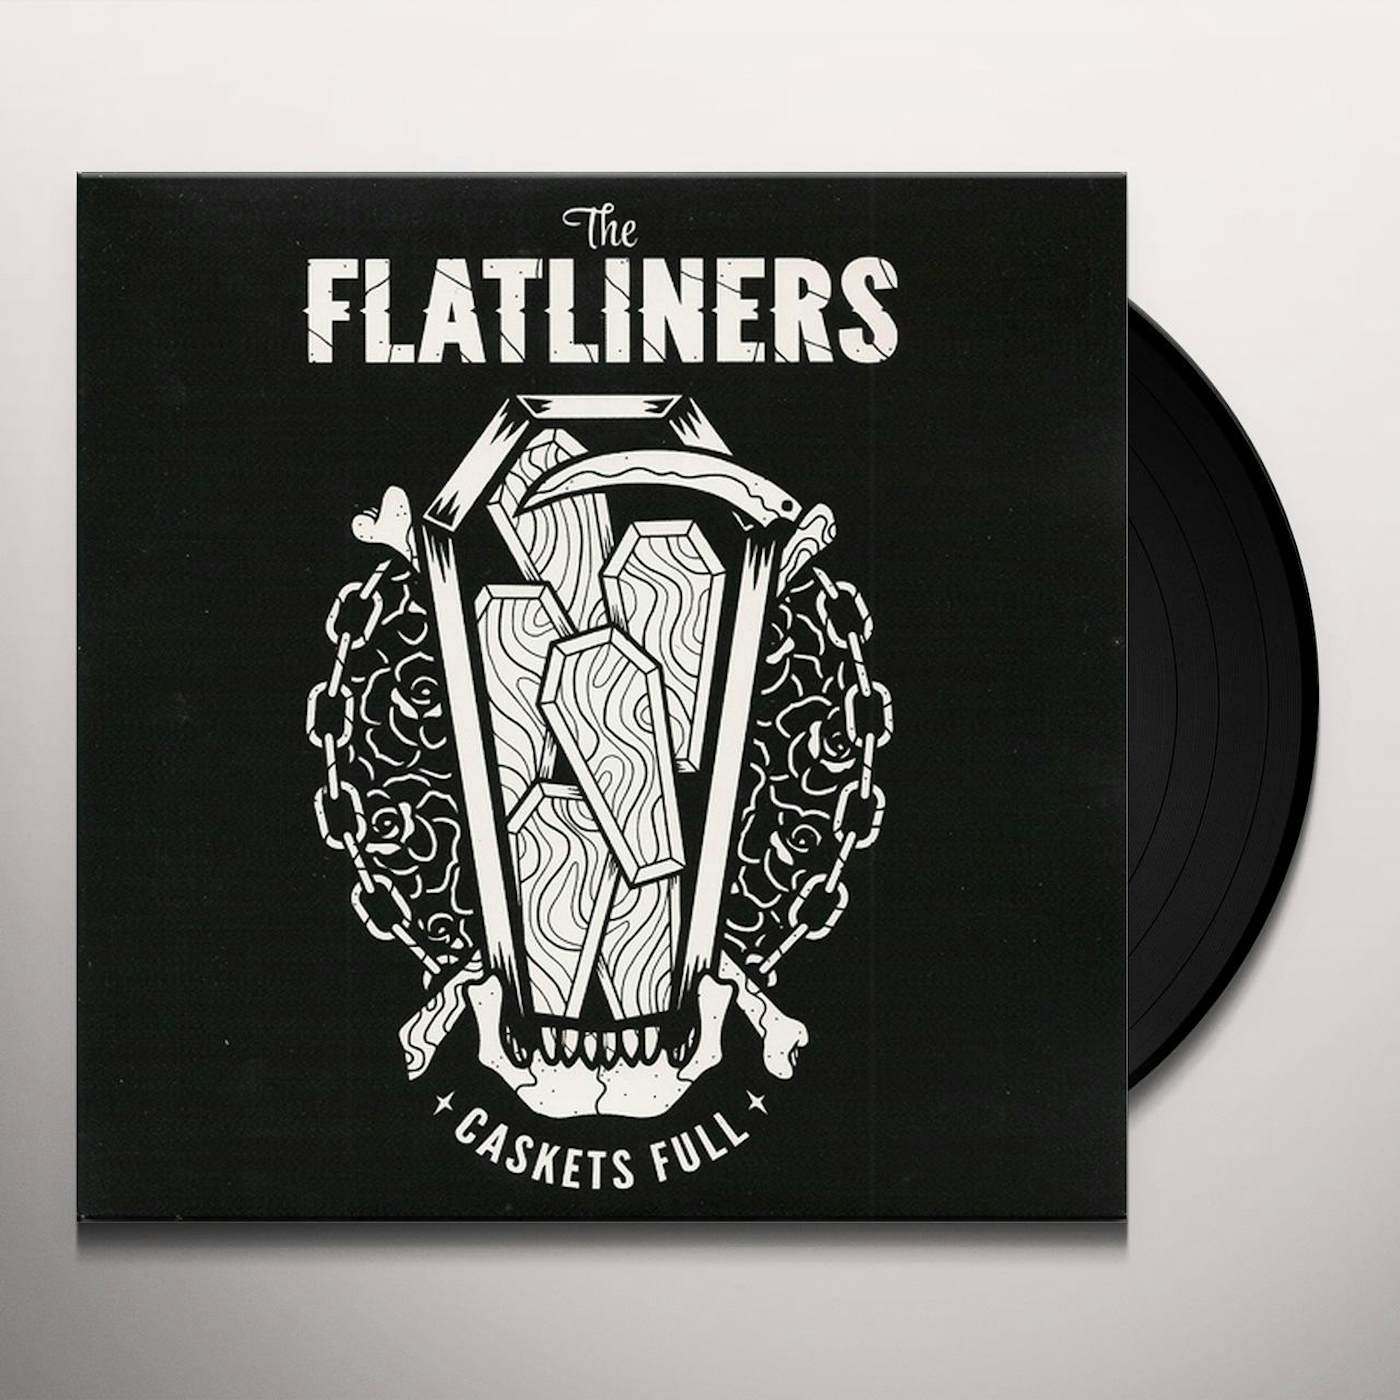 The Flatliners Caskets Full Vinyl Record